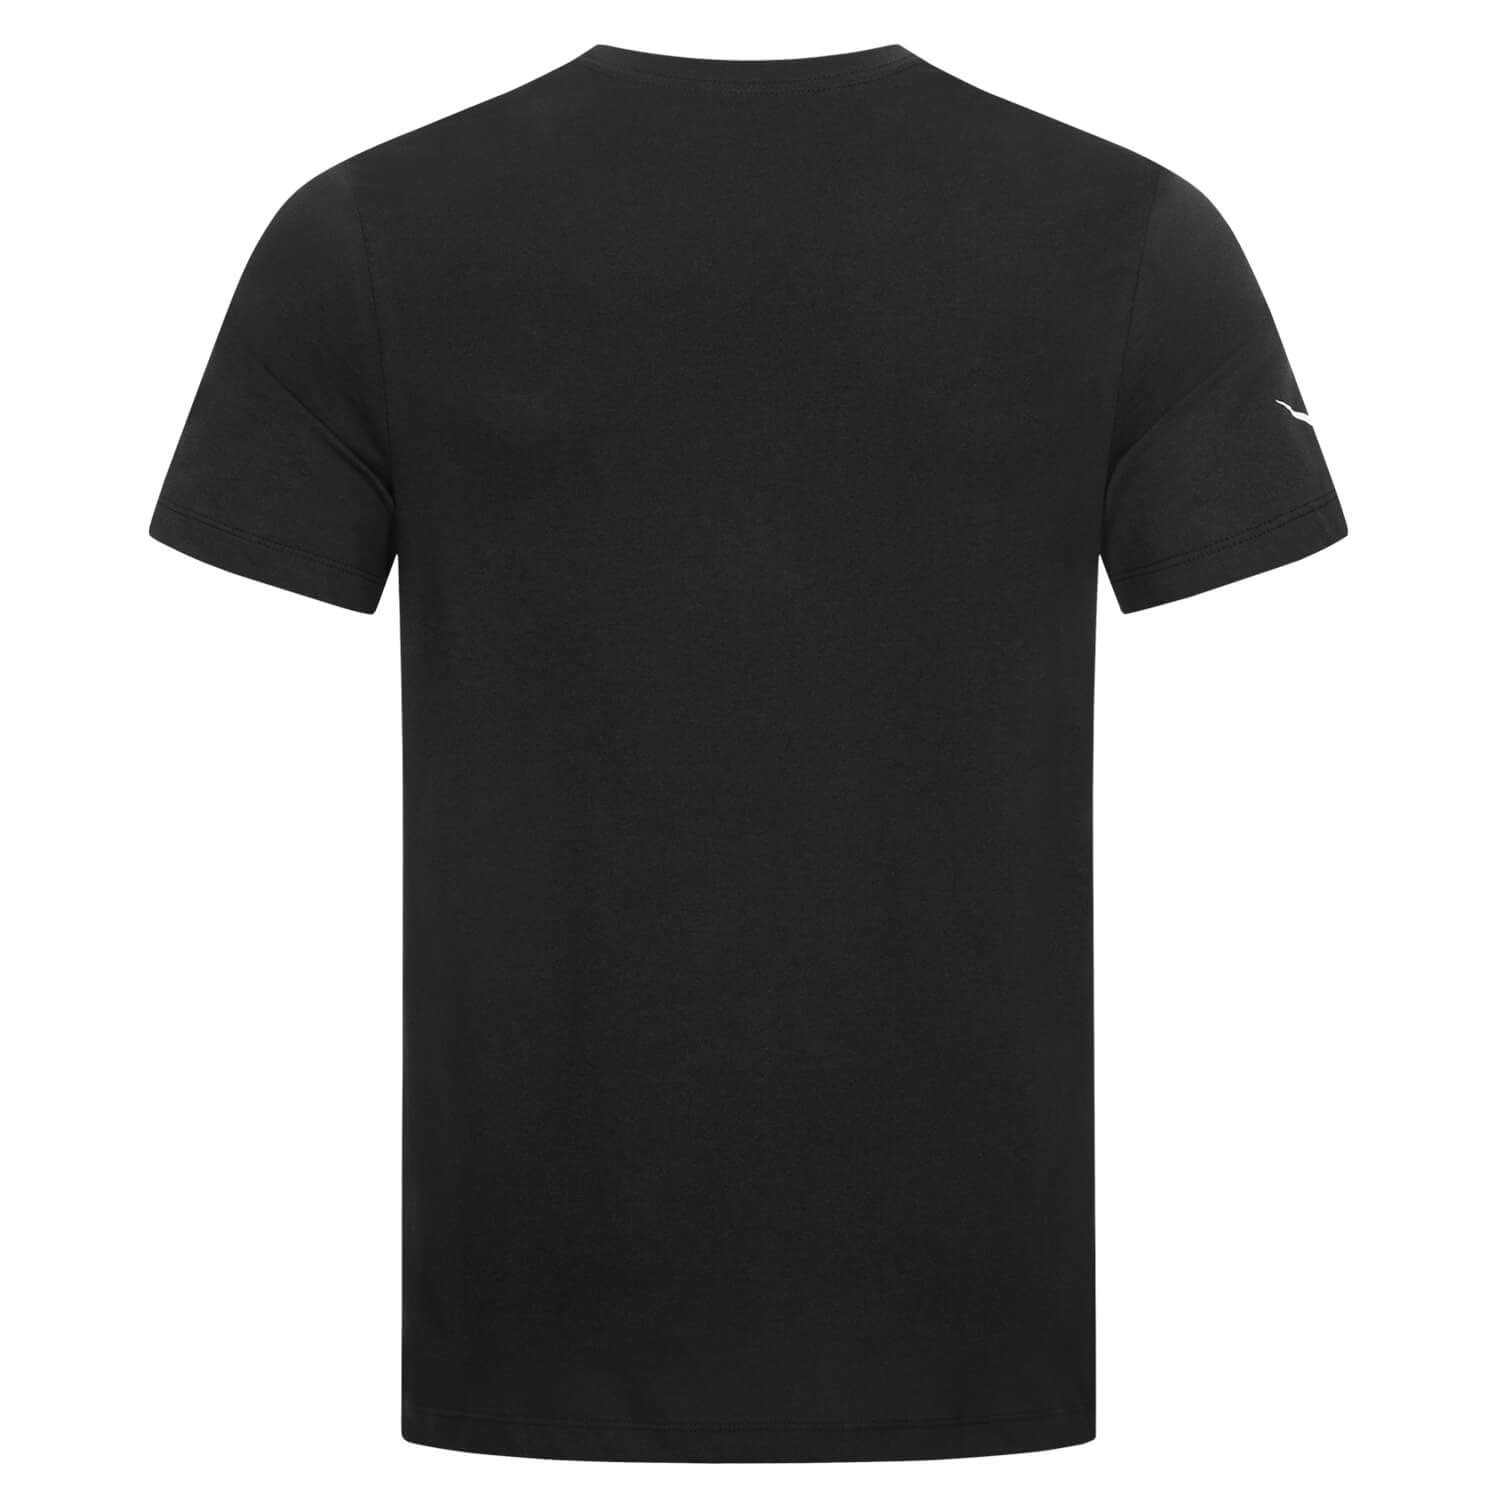 Bild 2: Nike T-Shirt Basic Schwarz 24